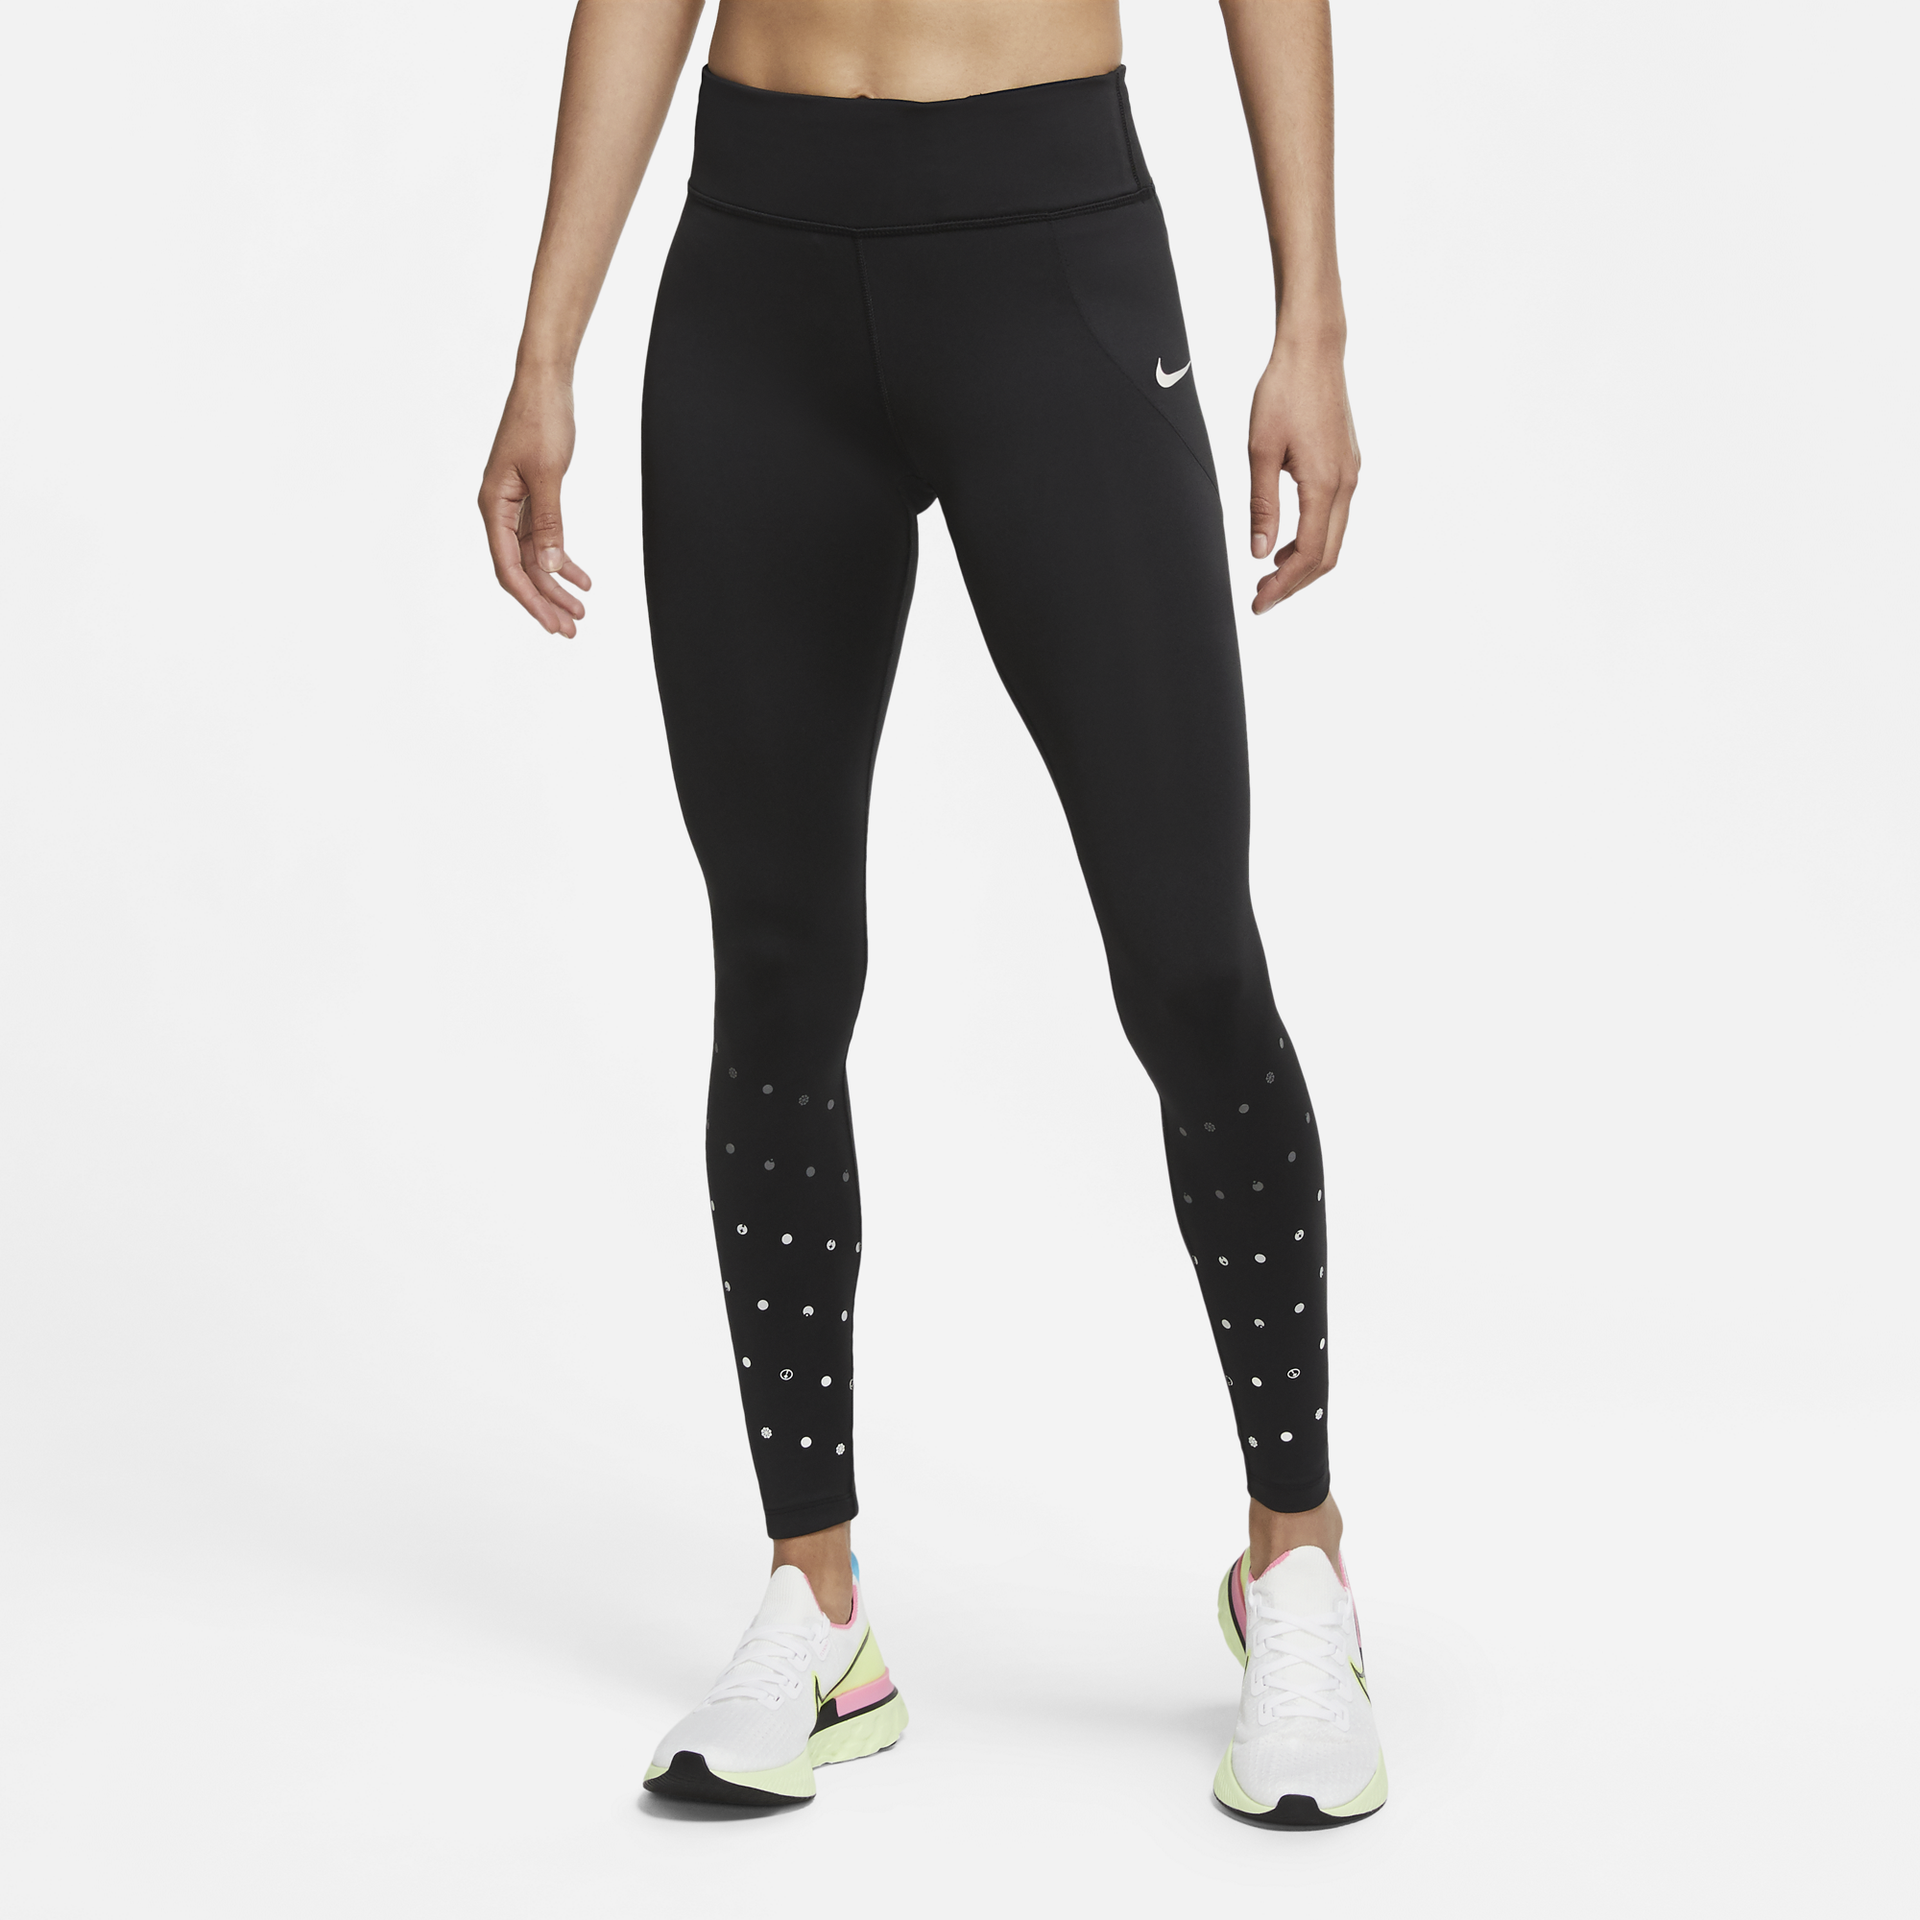 Nike Women's Fast Flash Running Tights - Black/Reflective Silver - Running  Bath